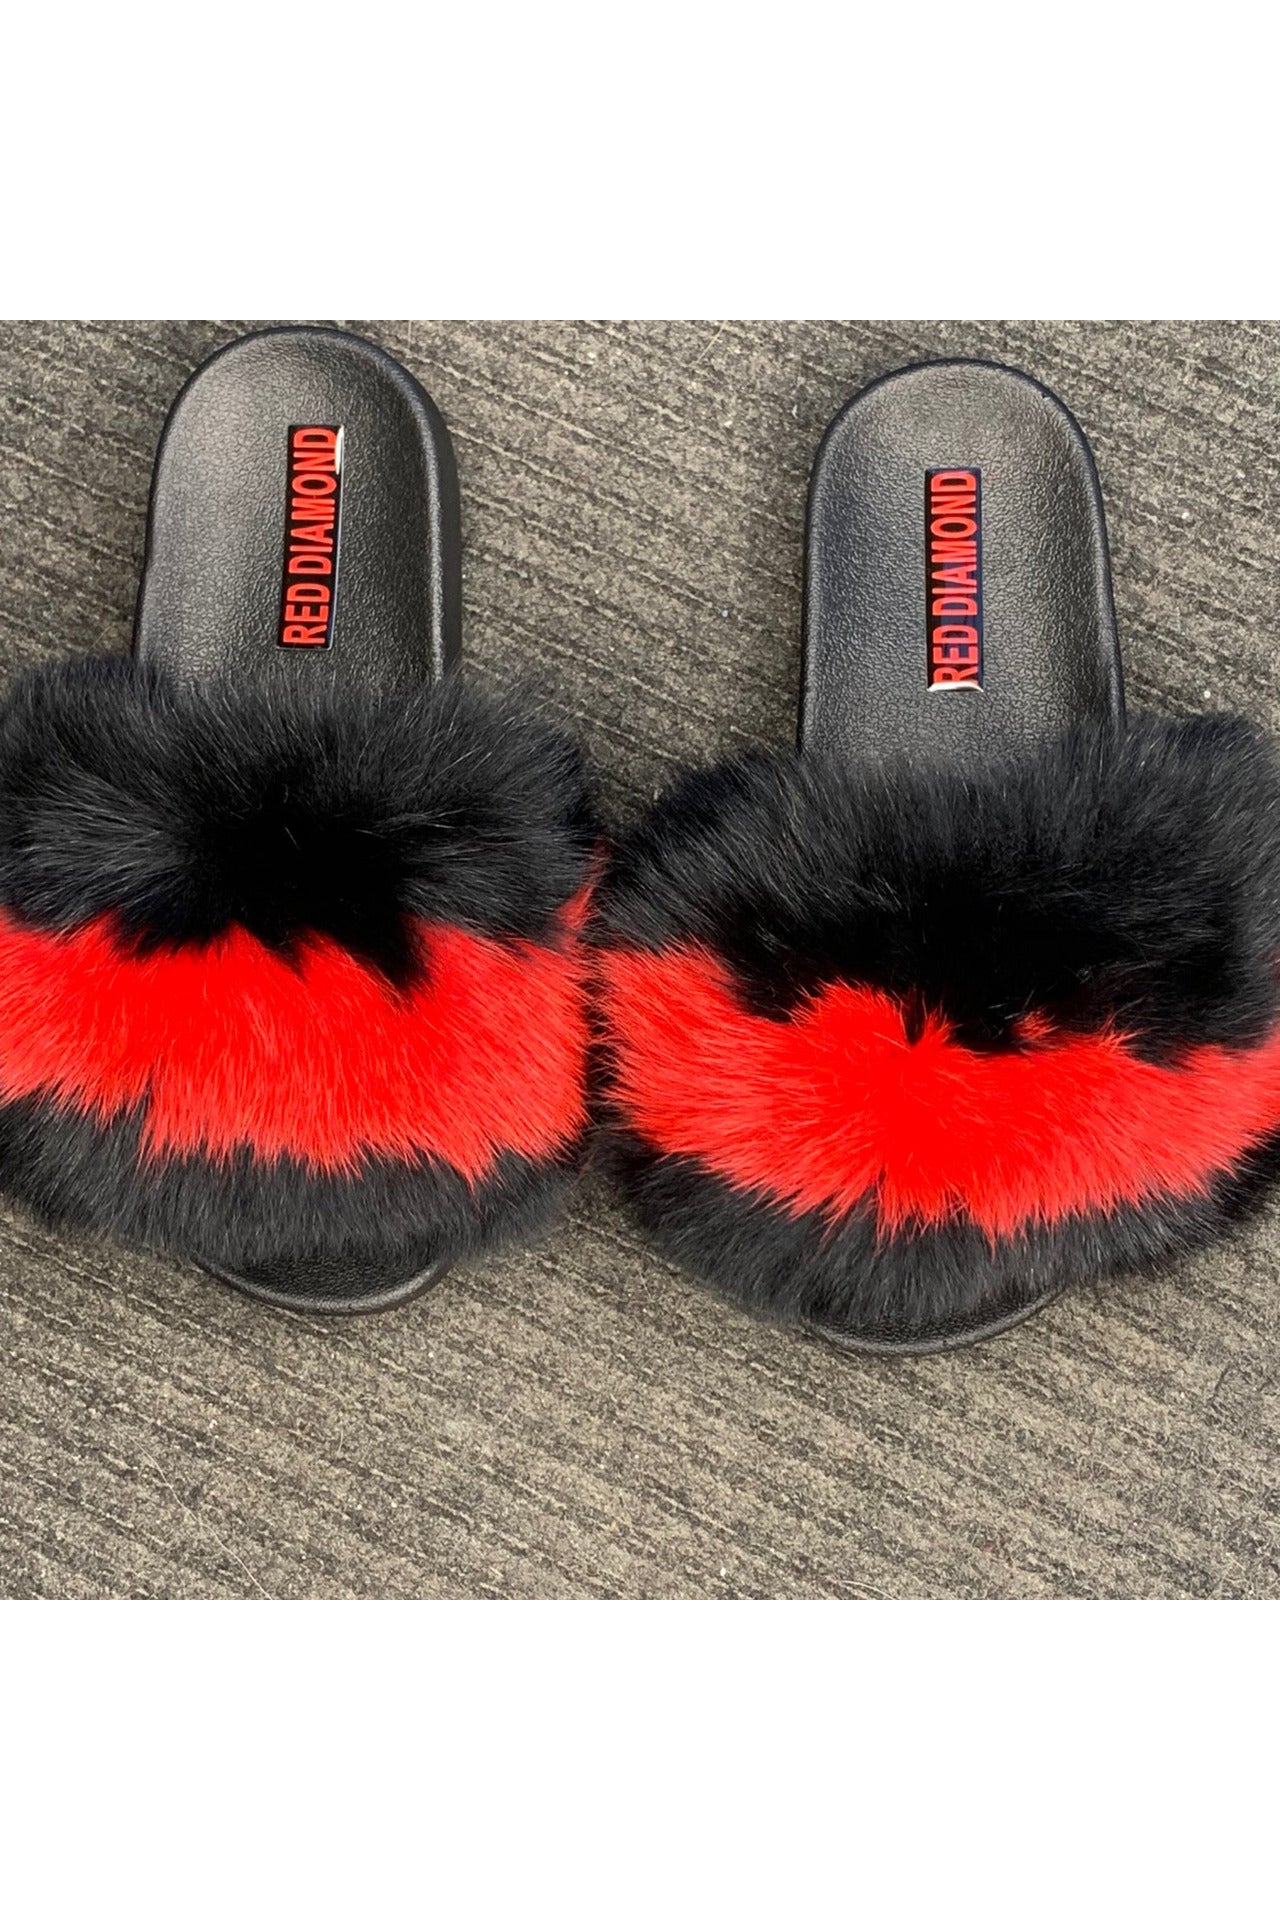 Red-black slides